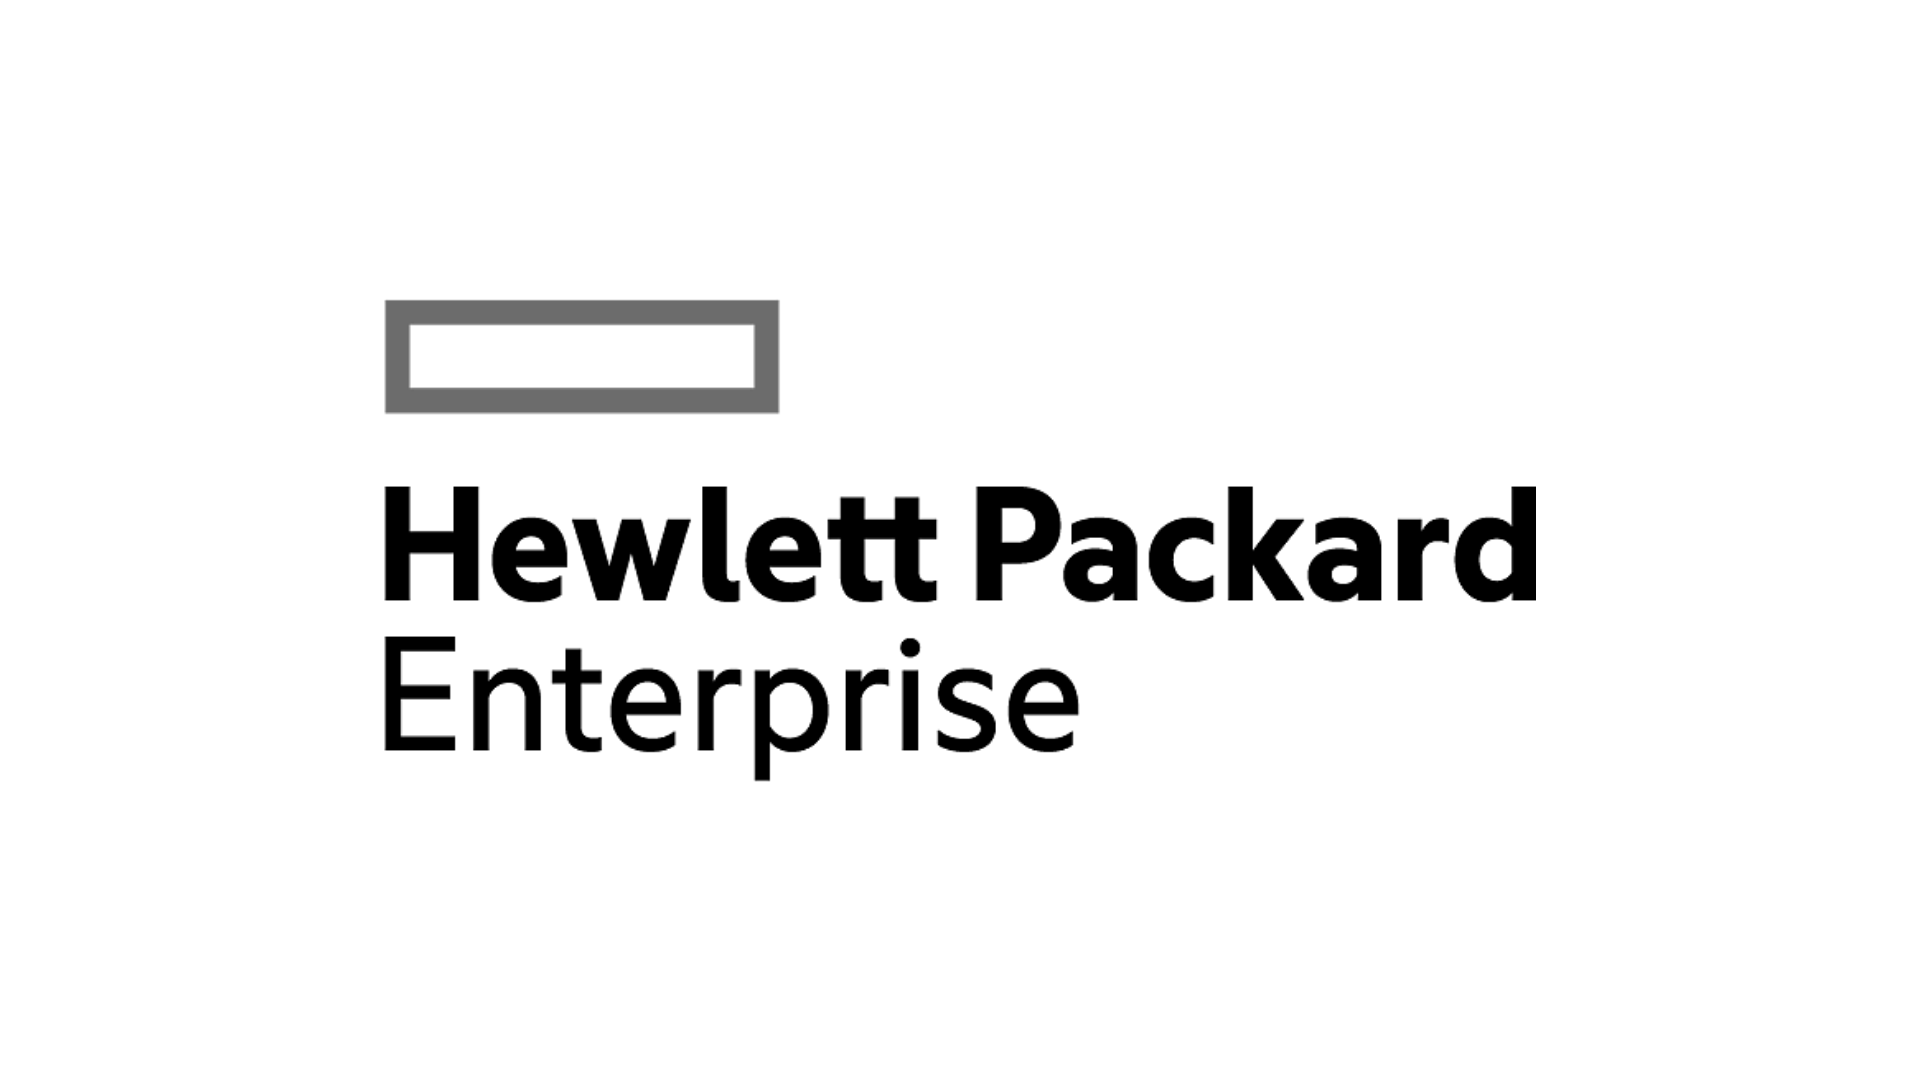 Hewlett Packard Grayscale logo